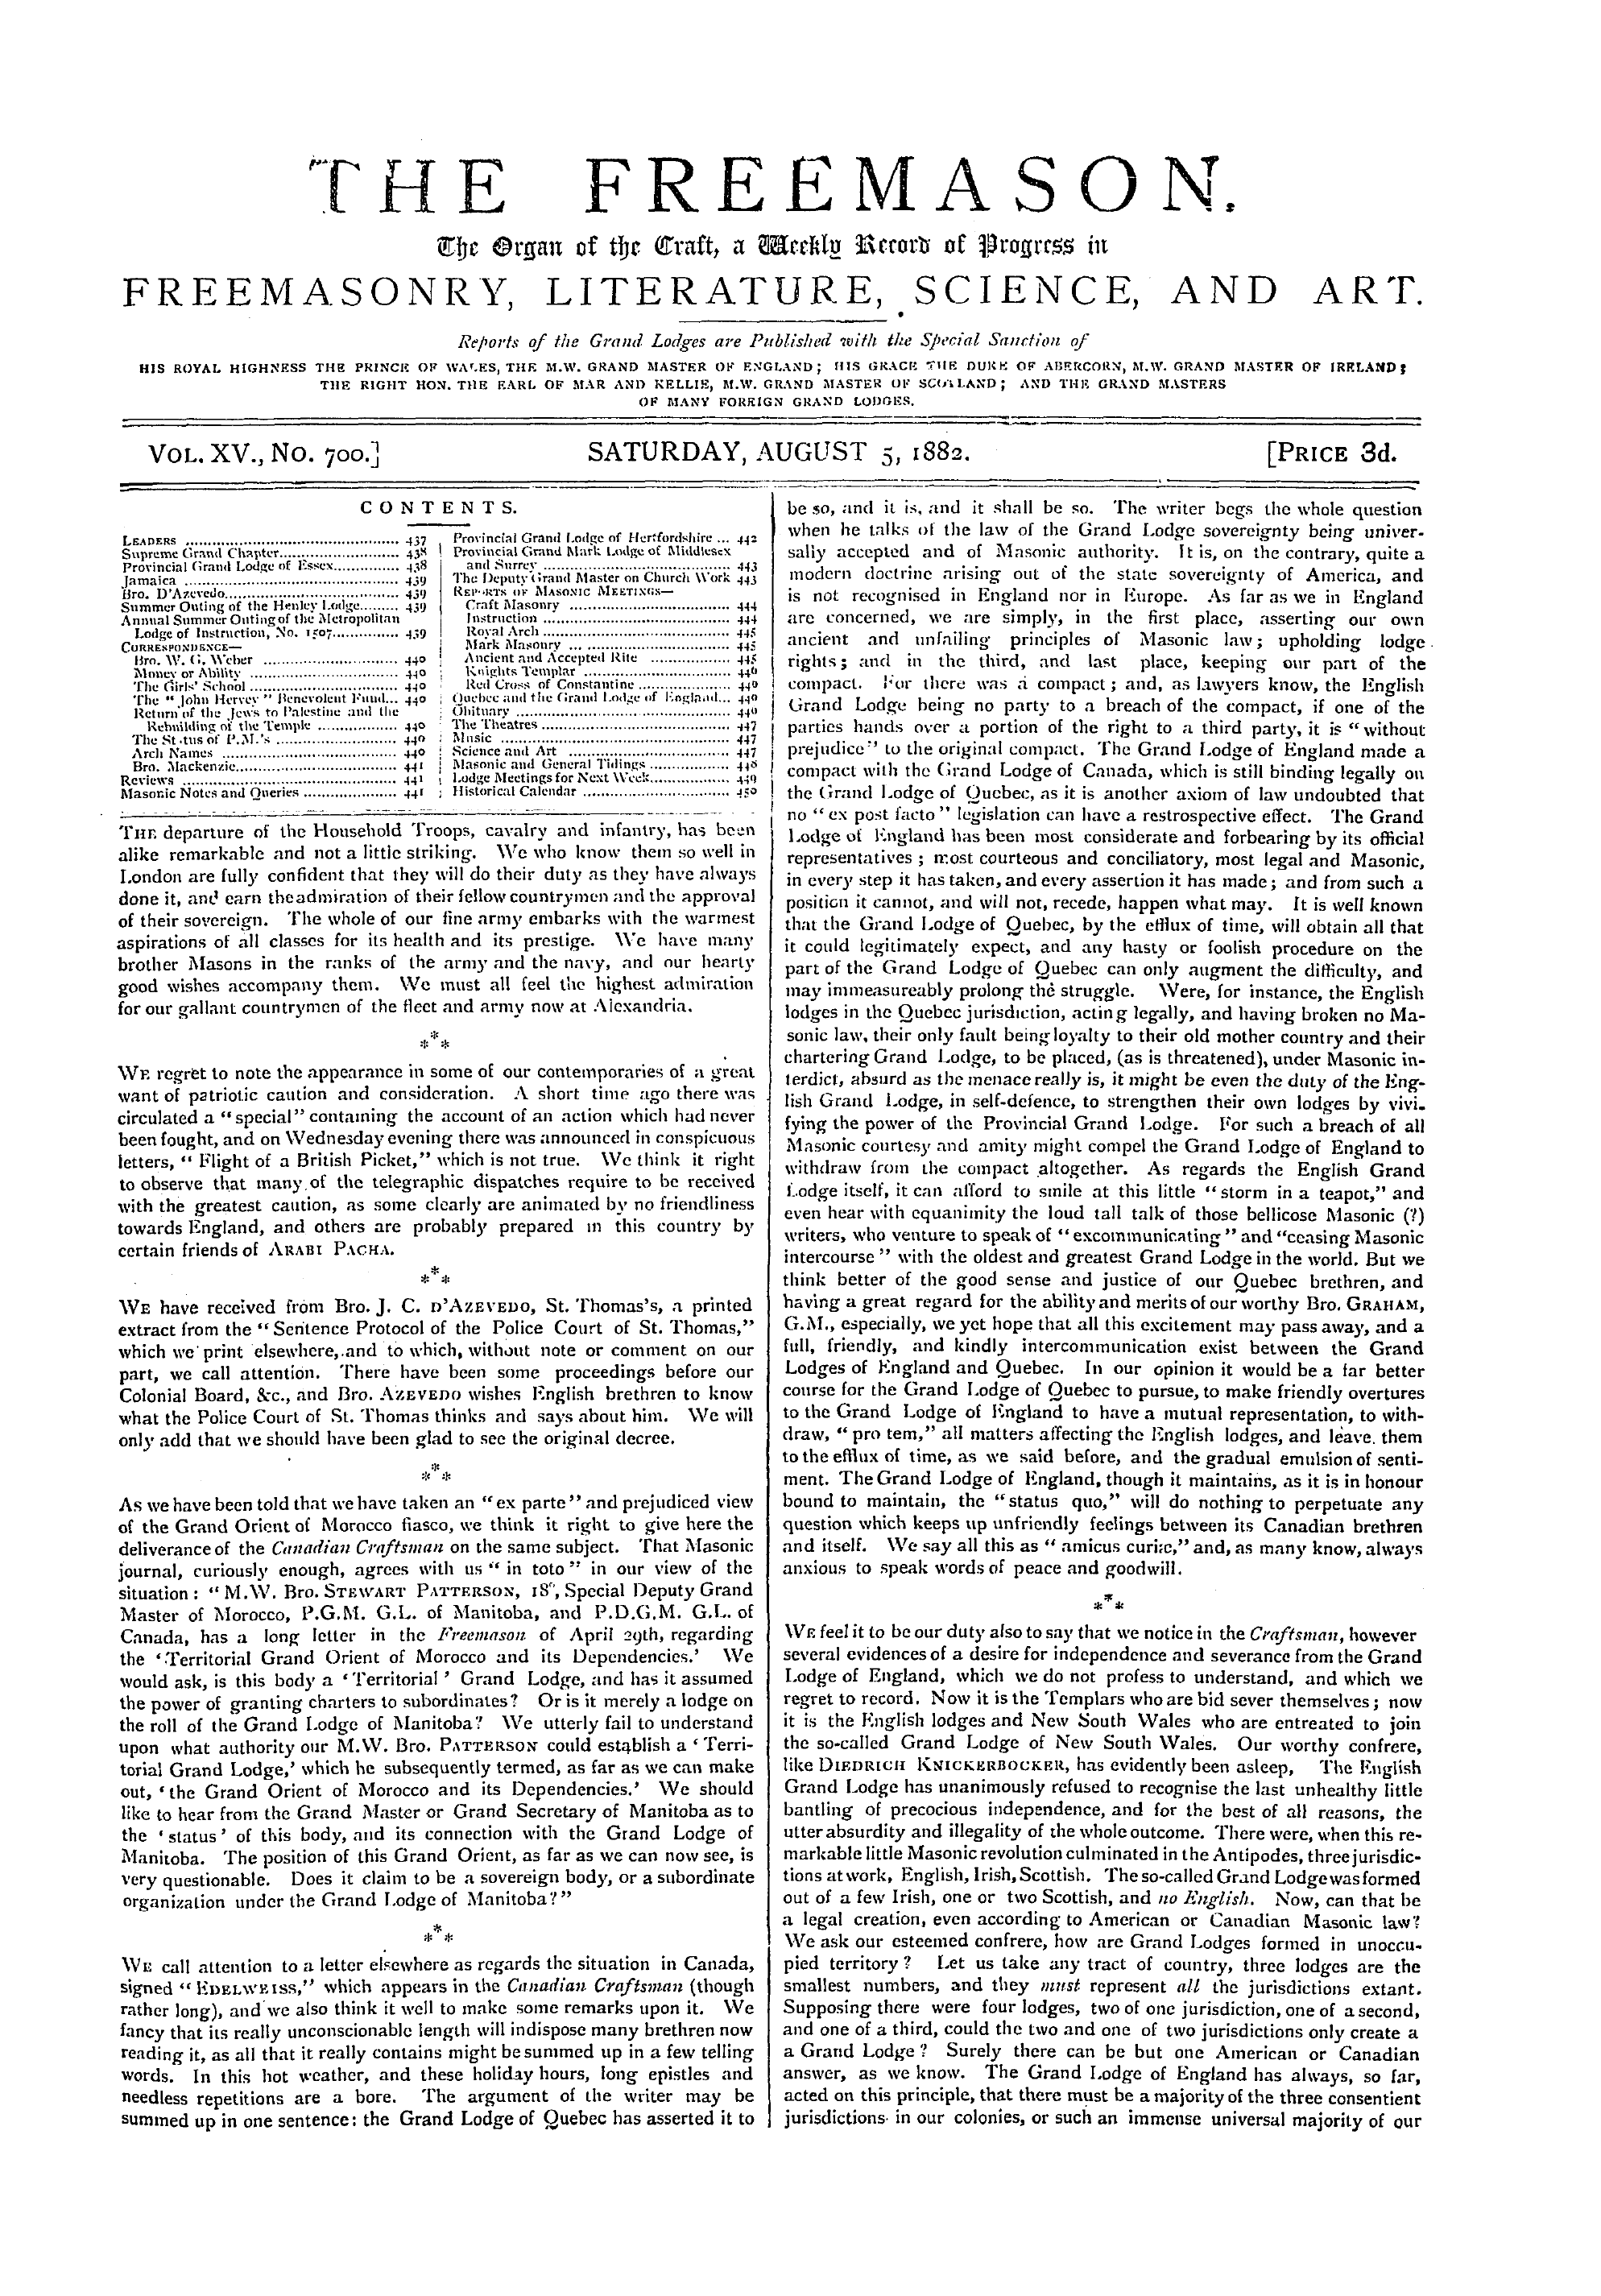 The Freemason: 1882-08-05 - Contents.